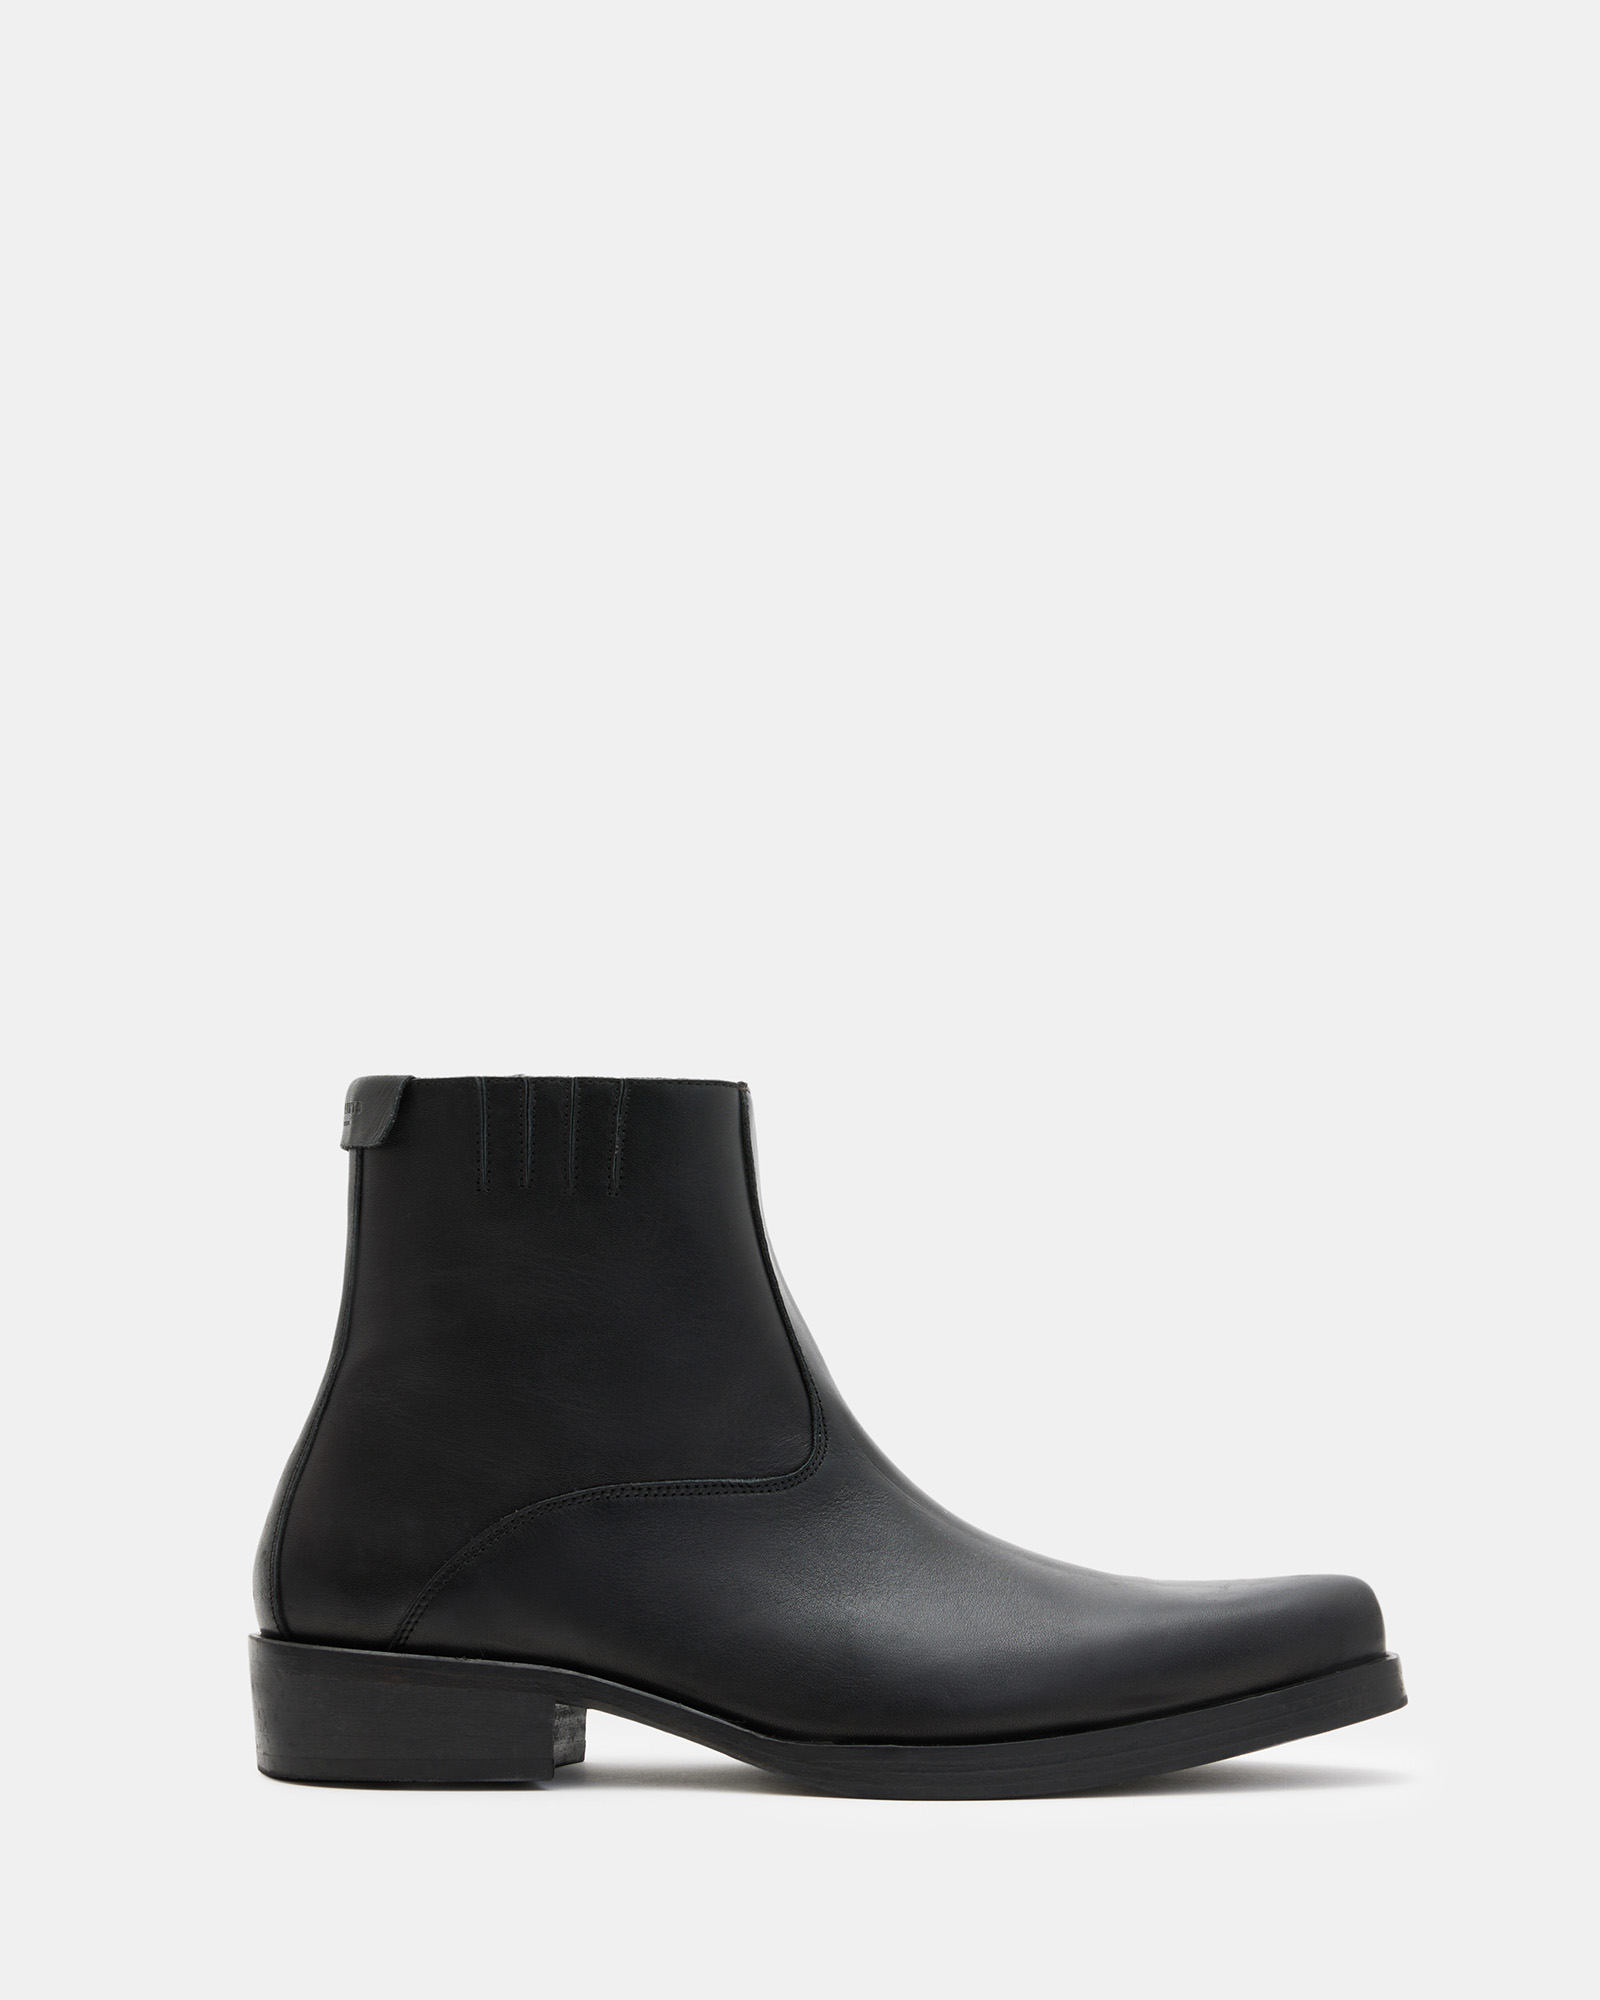 AllSaints Booker Leather Zip Up Boots,, Black, Size: UK